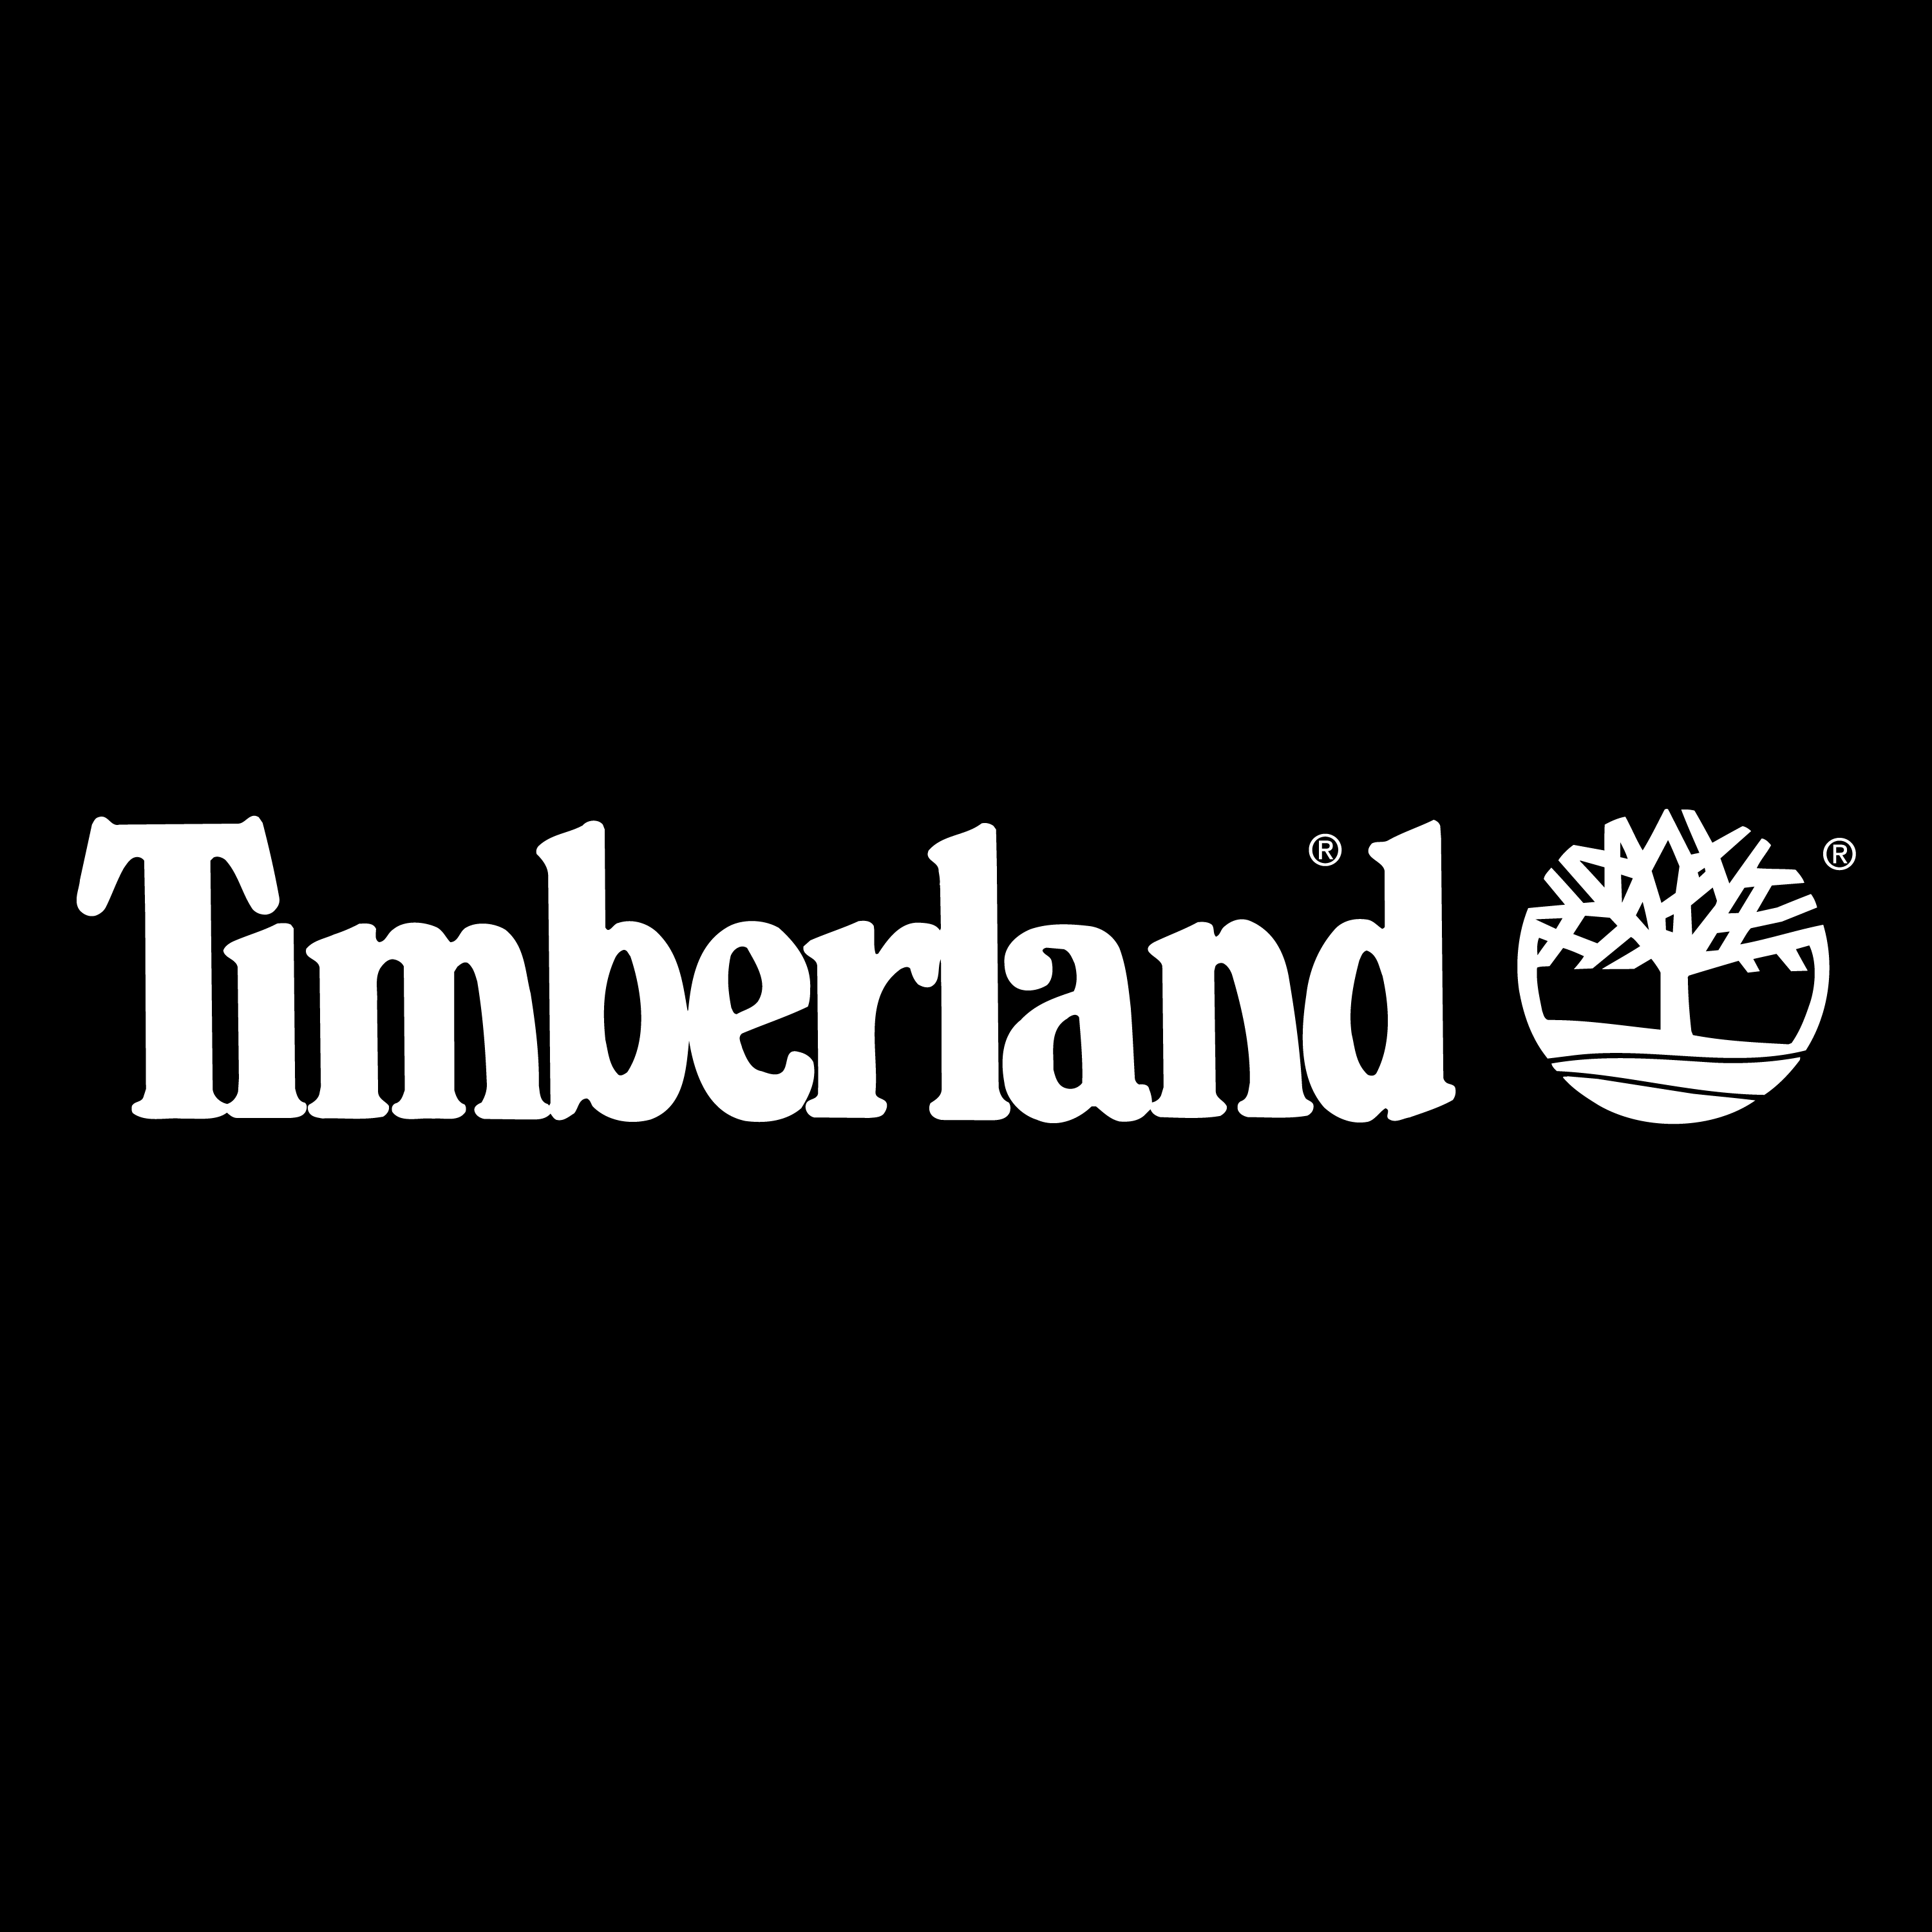 timberland discount